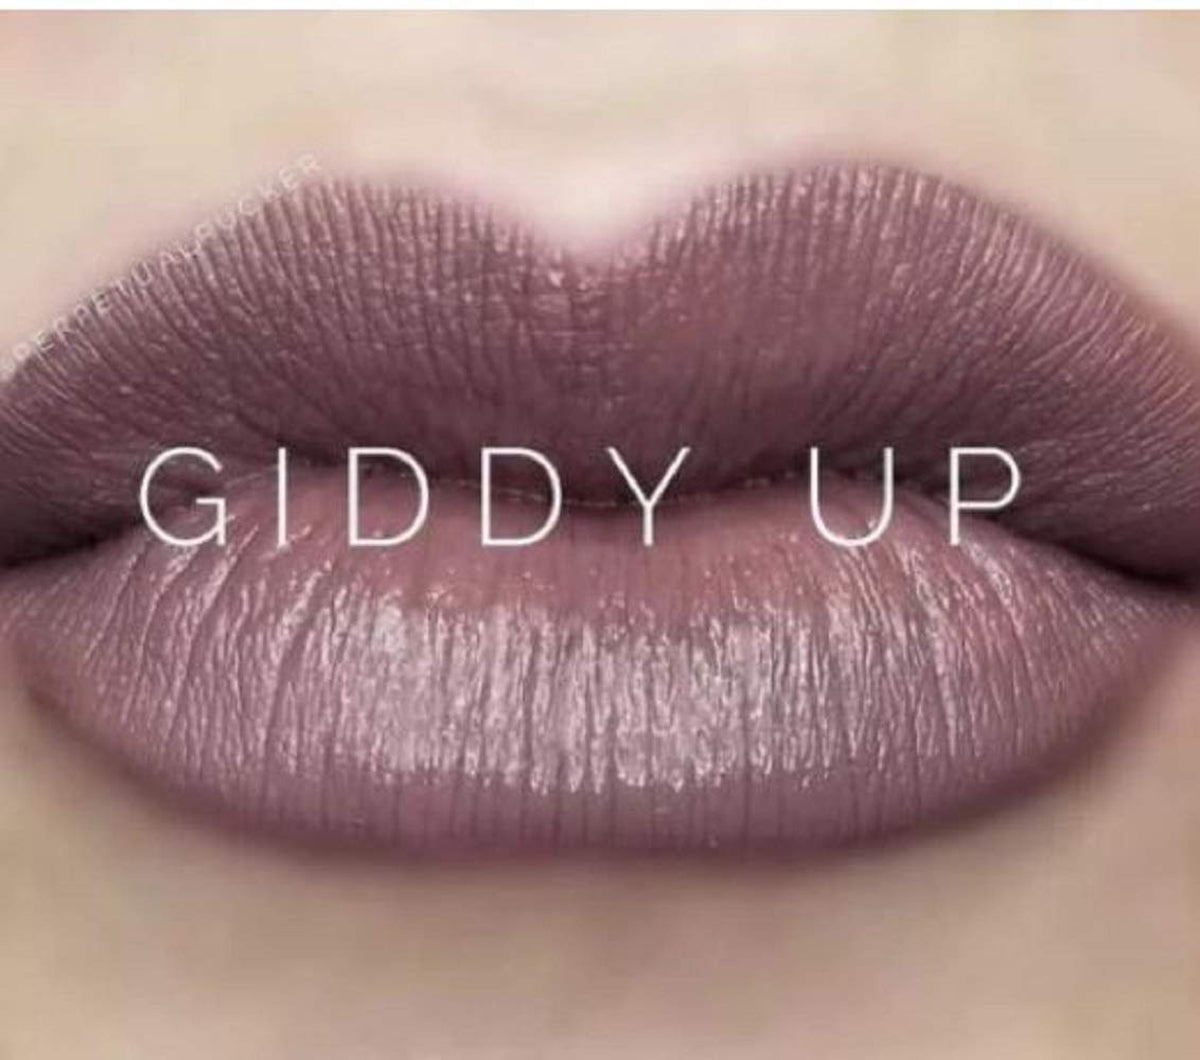 Giddy Up, LipSense Liquid Lip Color